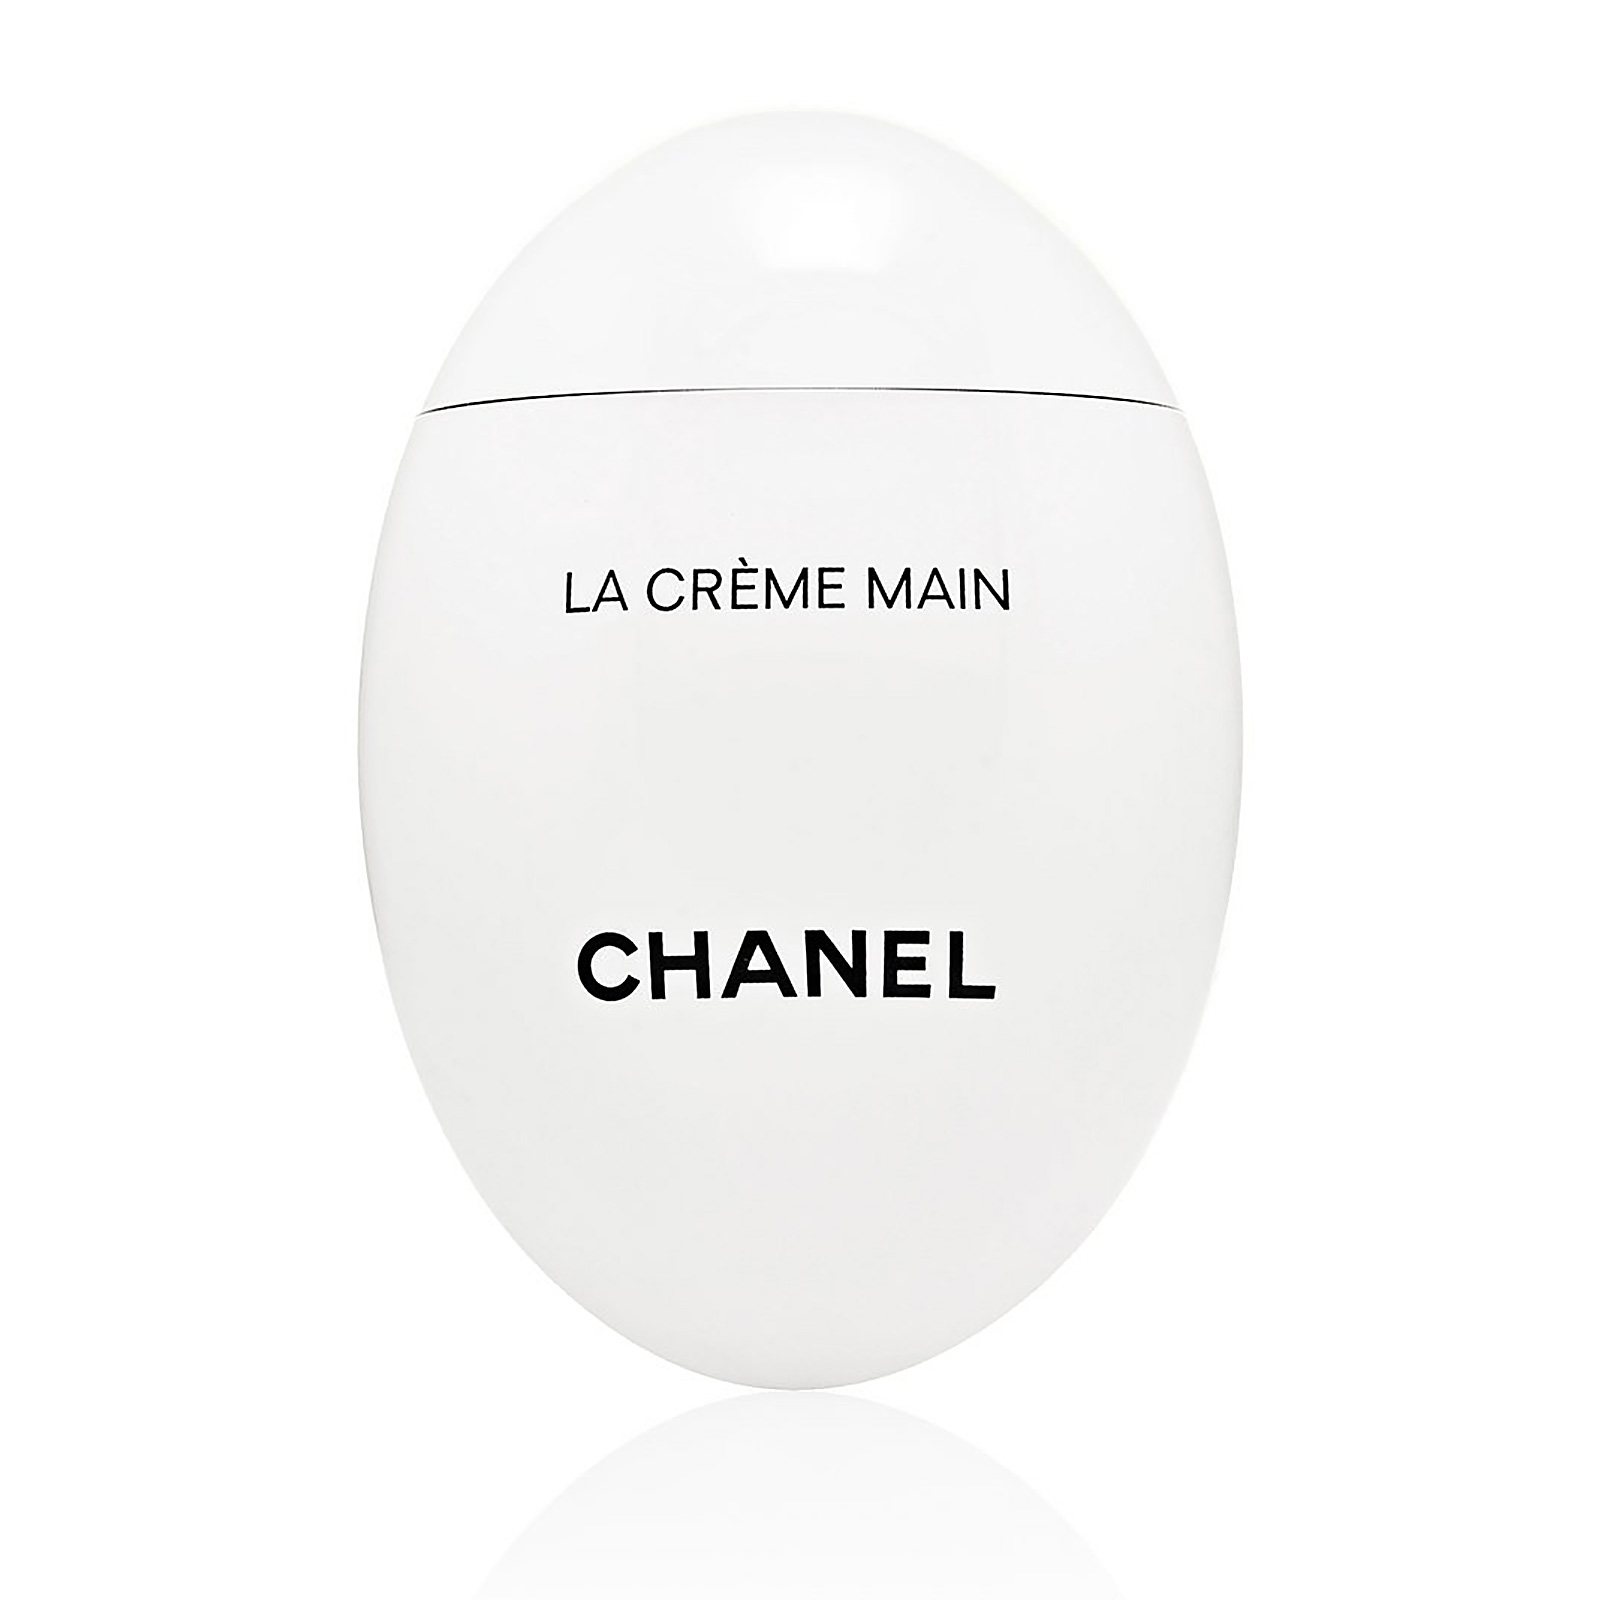 Chanel La Crème Main Hand Cream Texture Riche50 ml 1.7 oz AKB Beauty